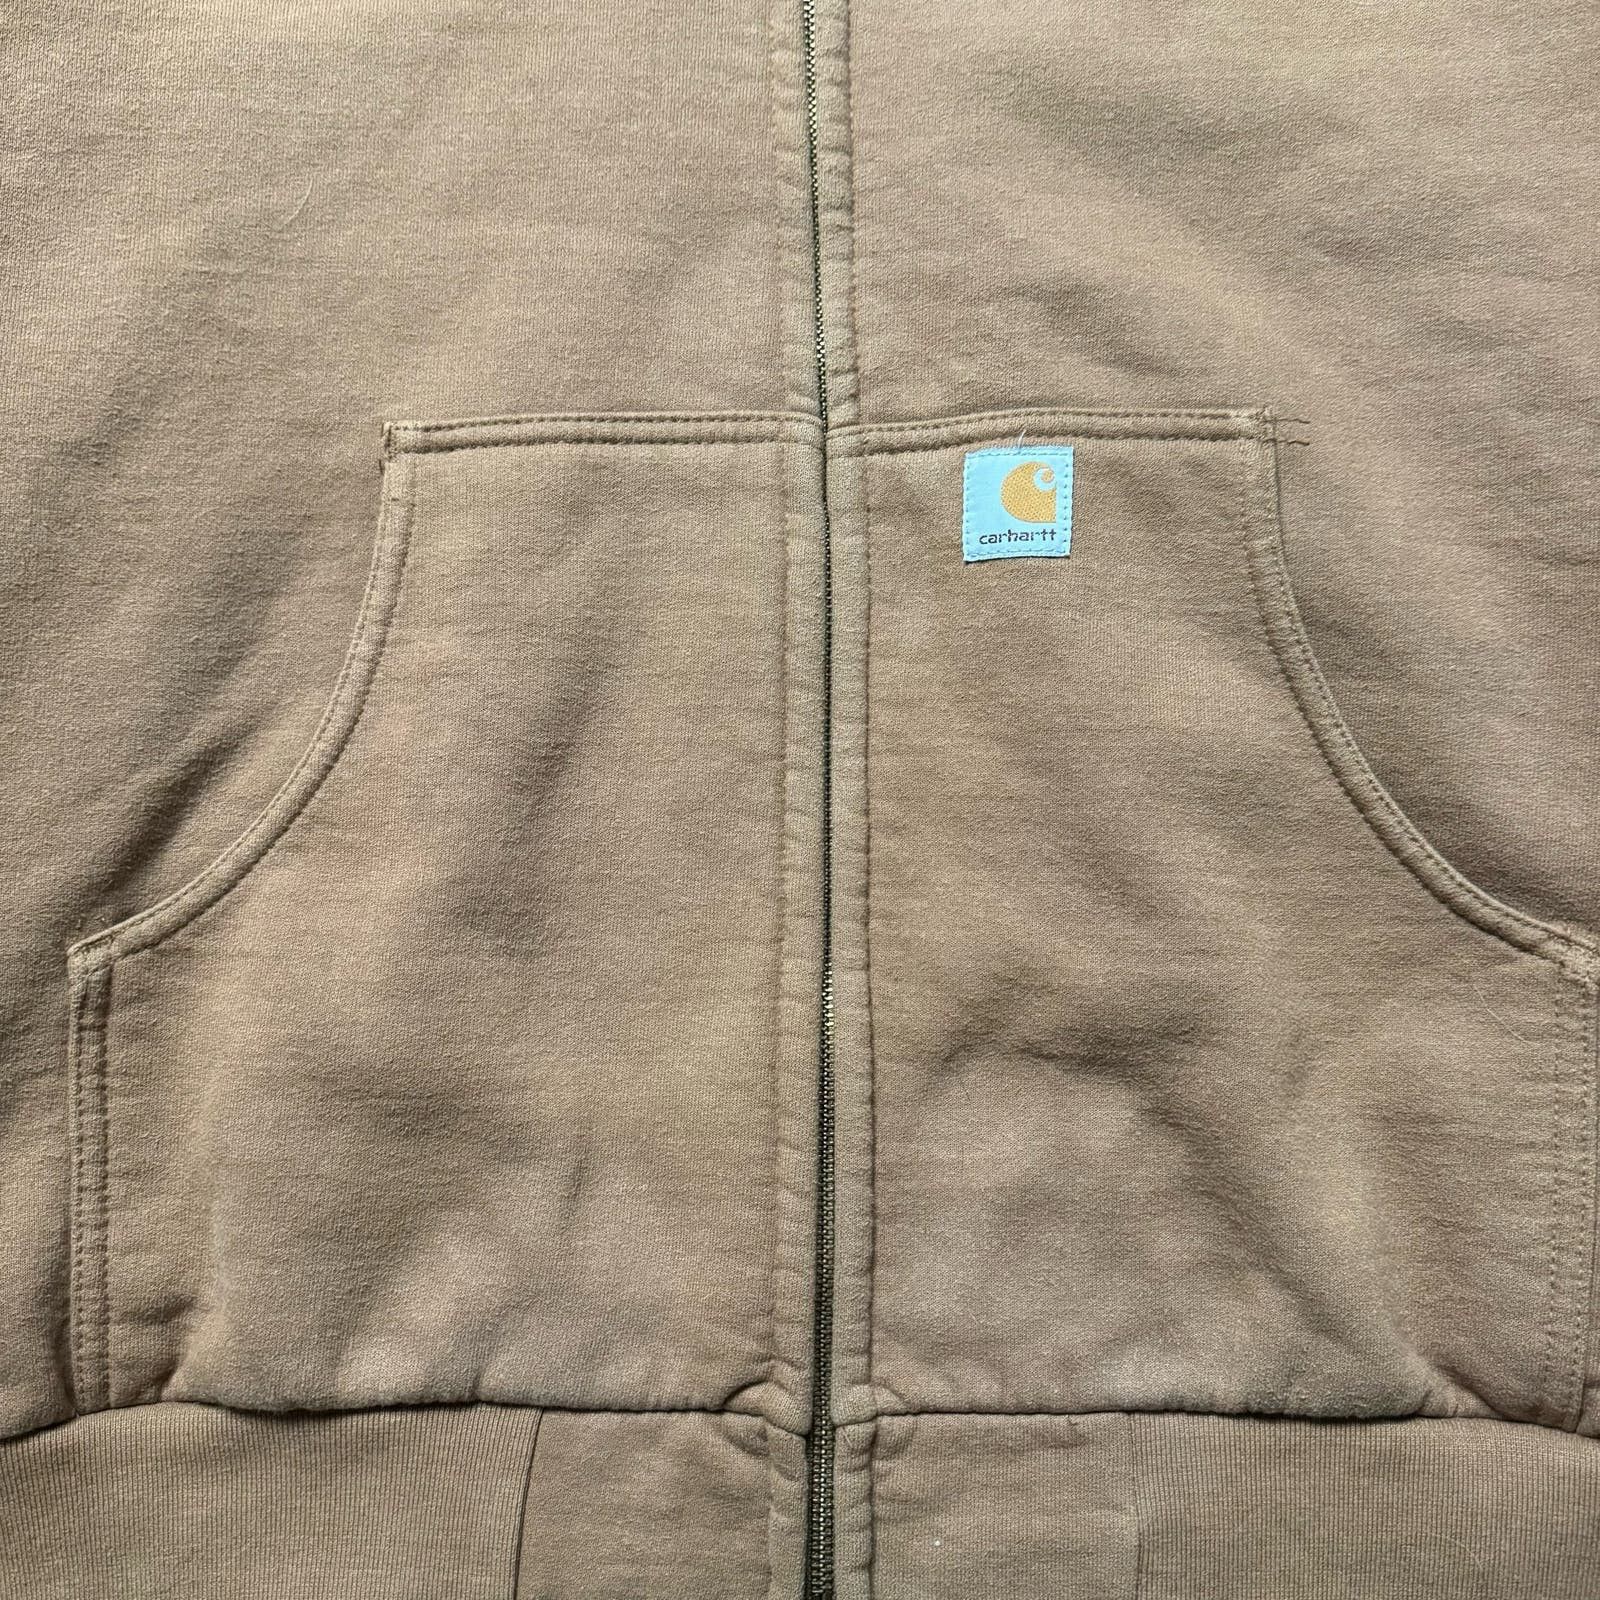 Carhartt Carhartt Workwear Weather Proof Lining Zip Up Hoodie Sweater Size US XL / EU 56 / 4 - 5 Thumbnail